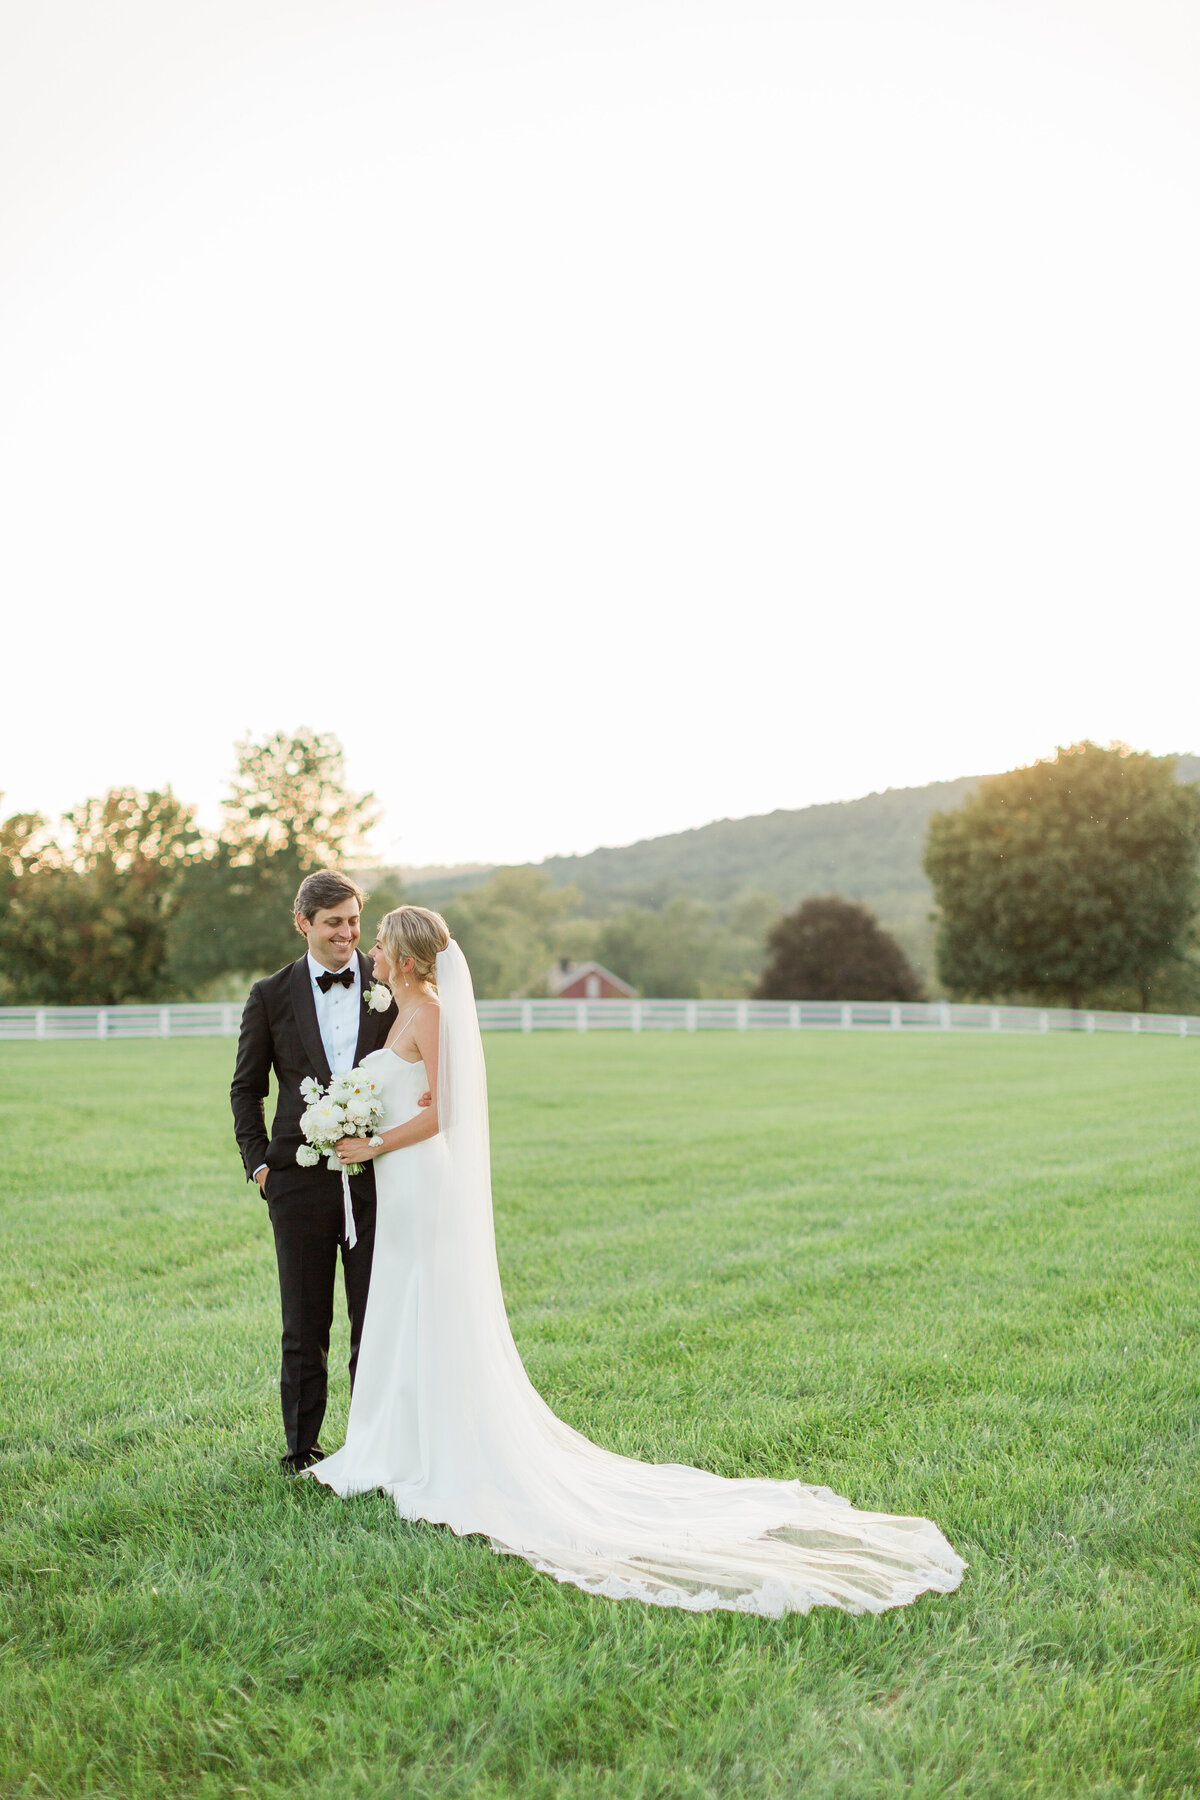 Matt&Carson-CastleHillCider-Charlottesville-Wedding-KelseyMariePhotography-September2021-4223